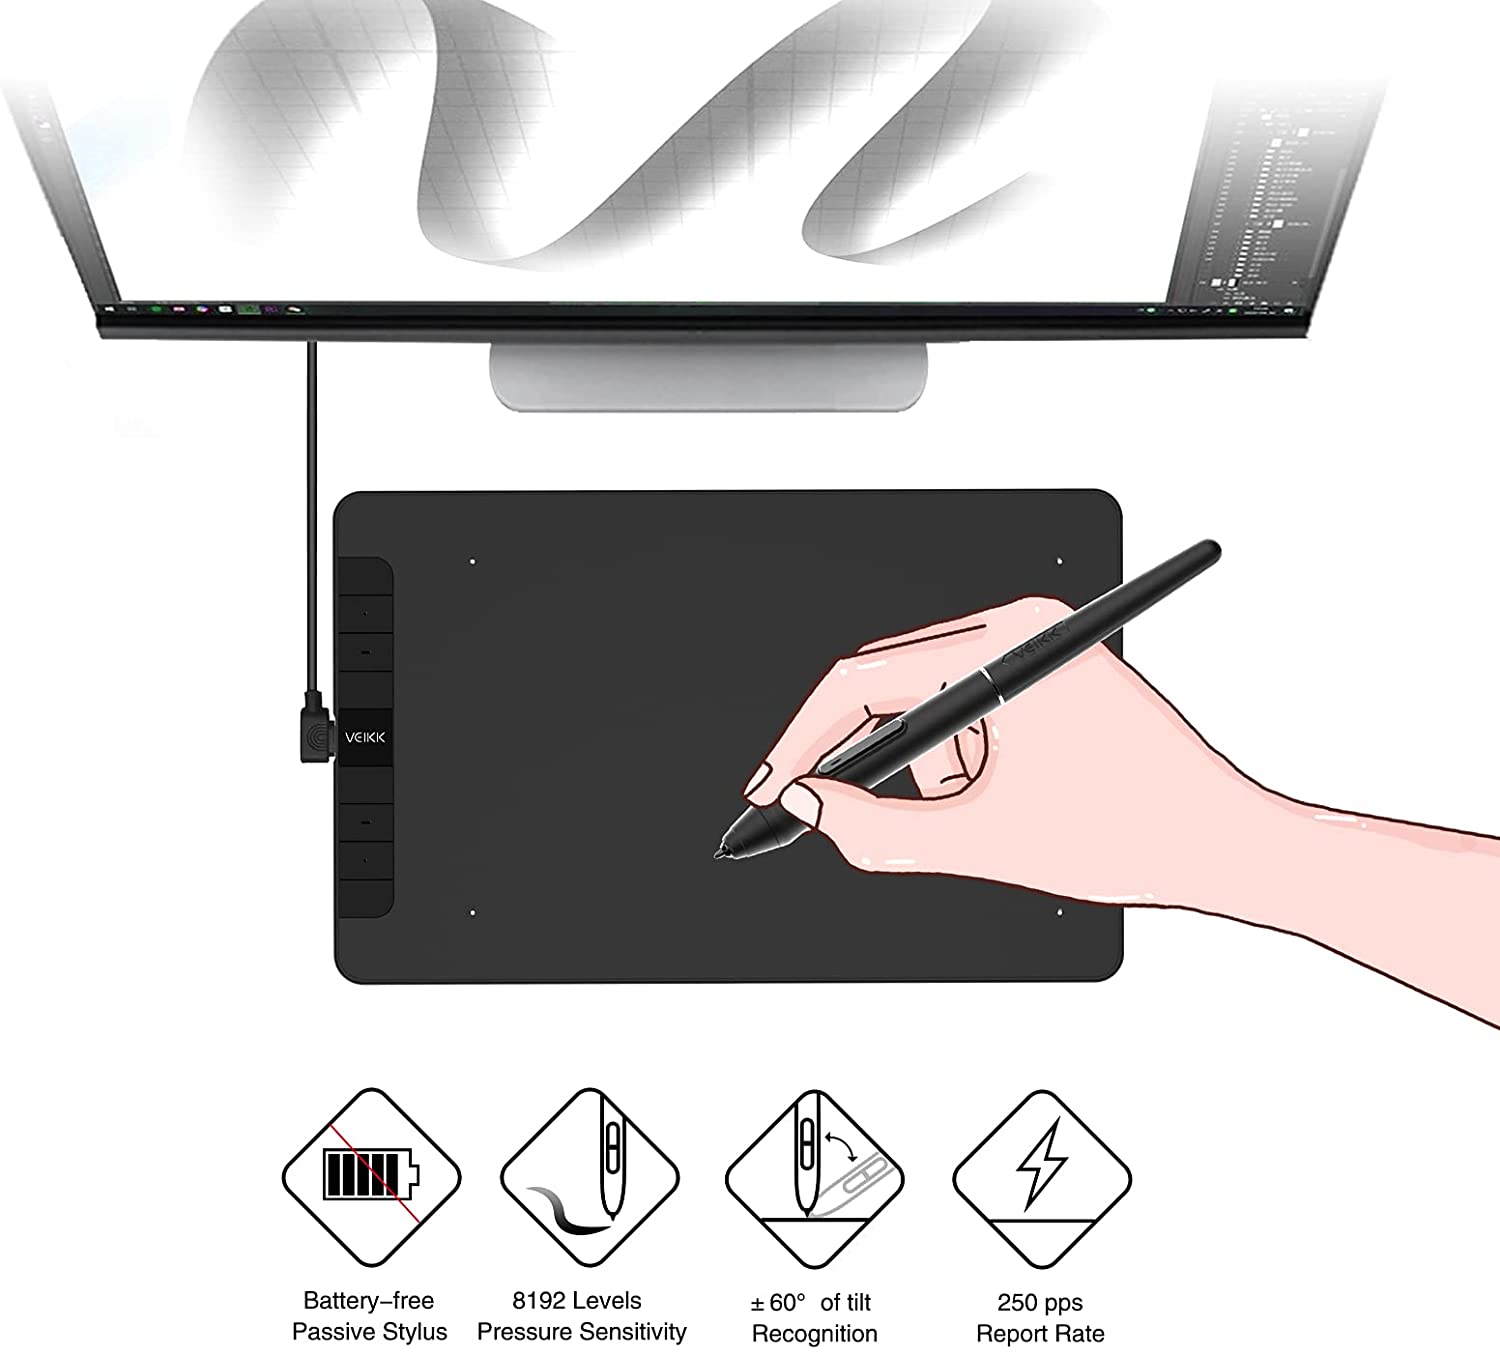 Veikk VK1060 Drawing Tablet , 10x6 Inch Graphic Tablet